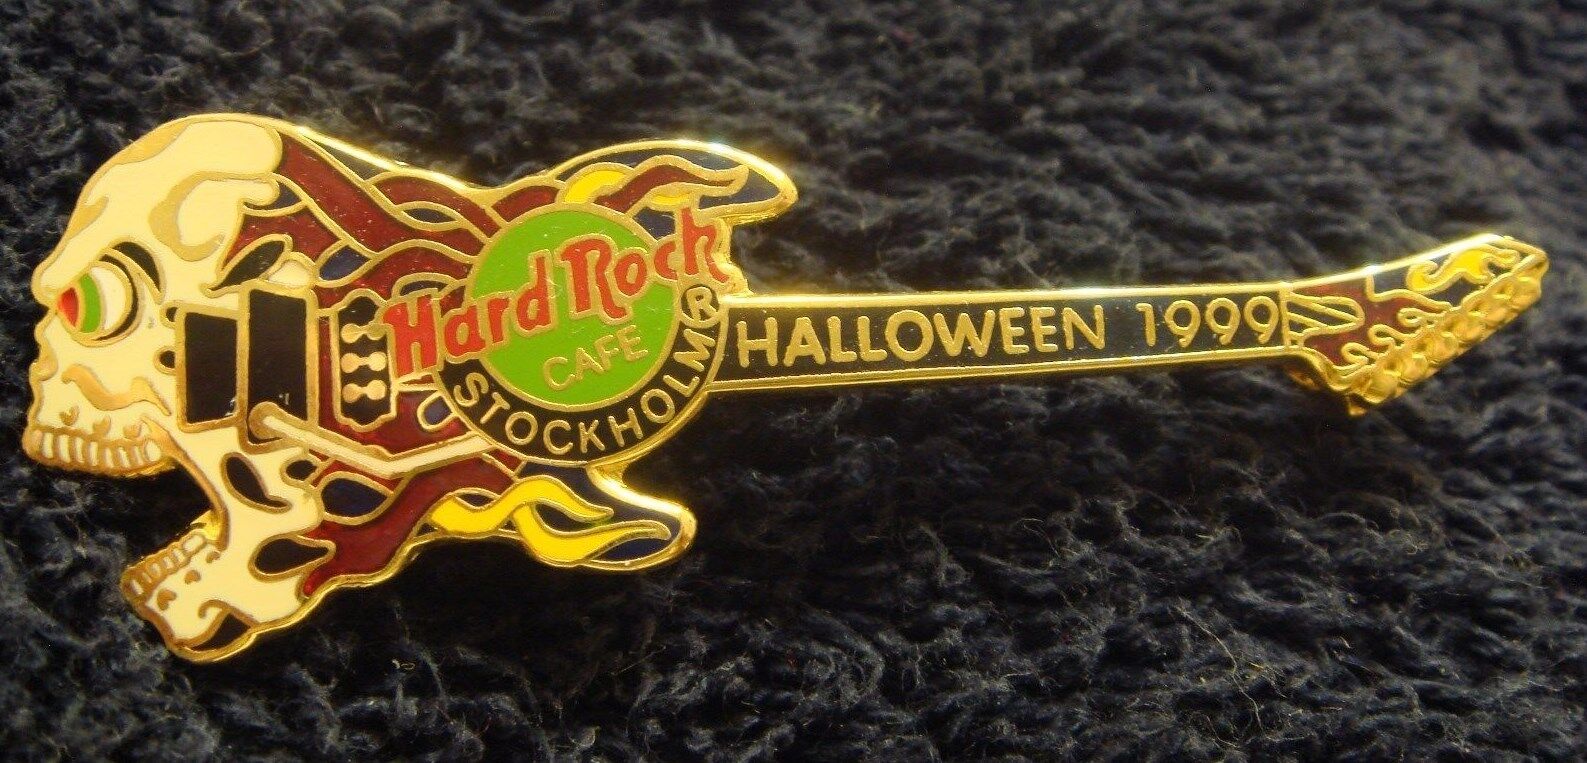 Hard Rock Cafe Stockholm Multi-Color Screaming Skull Halloween 1999 Guitar Pin